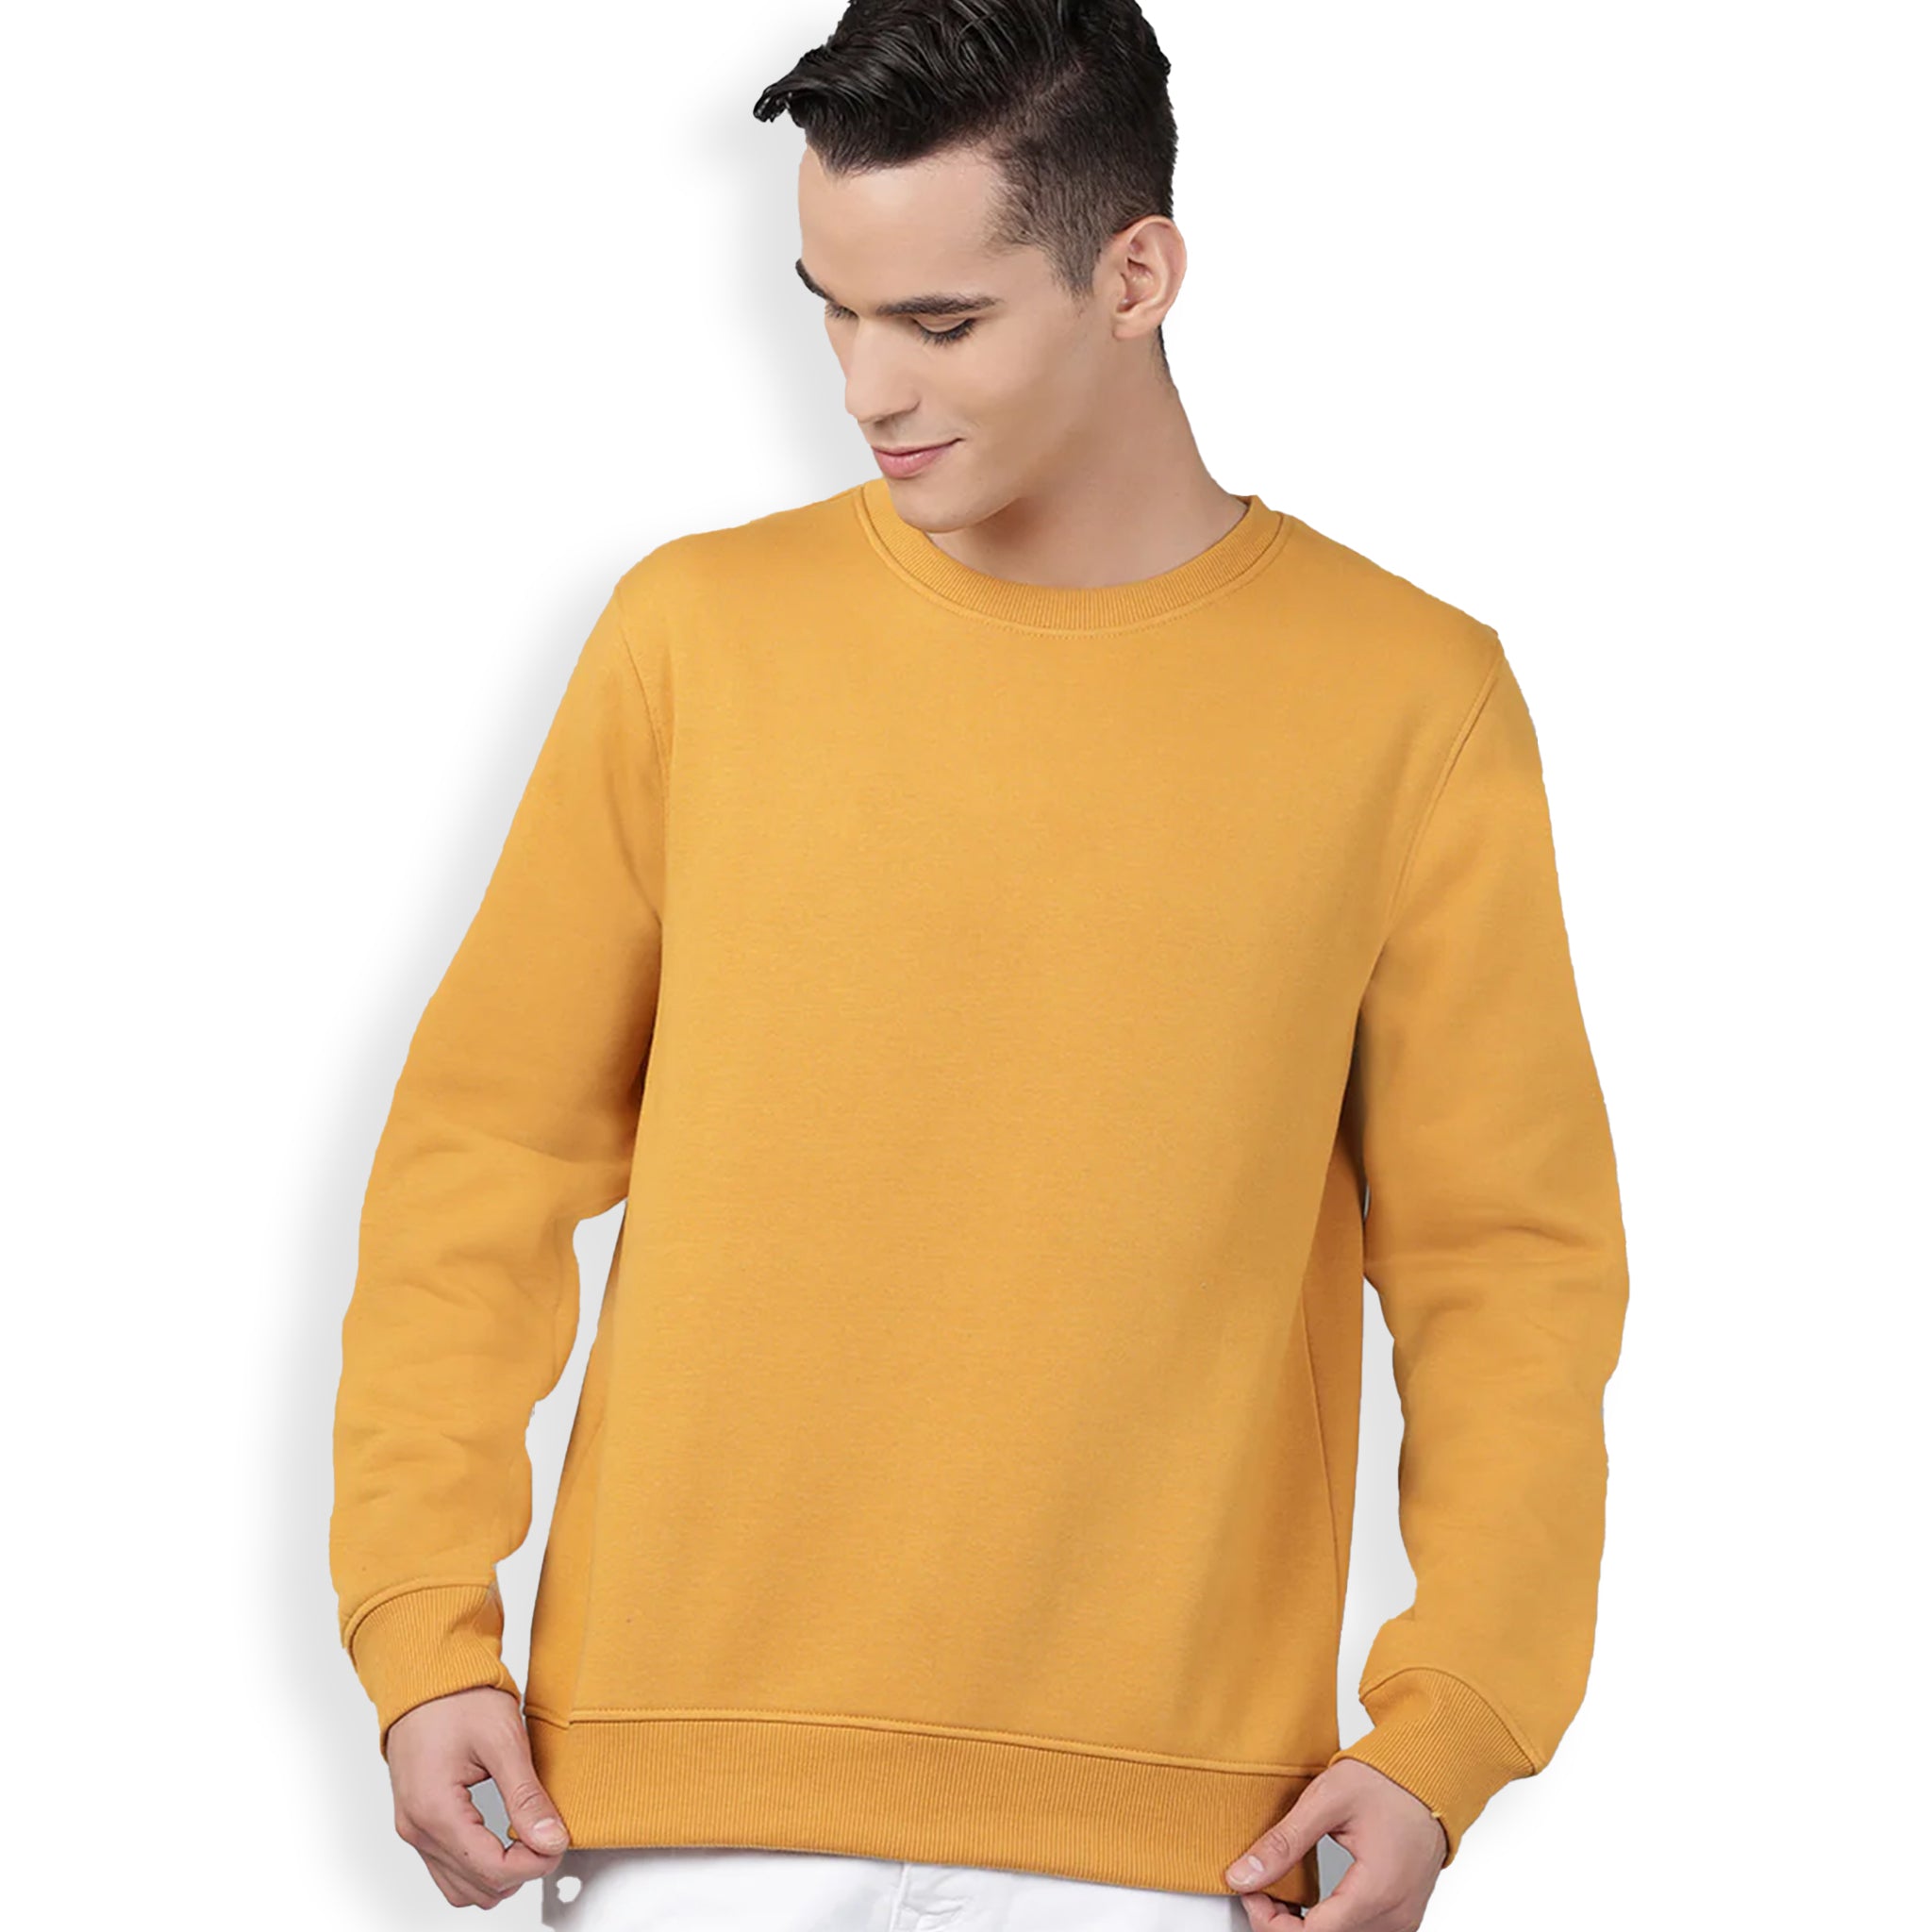 Bizzar's Mustard Yellow Sweatshirt